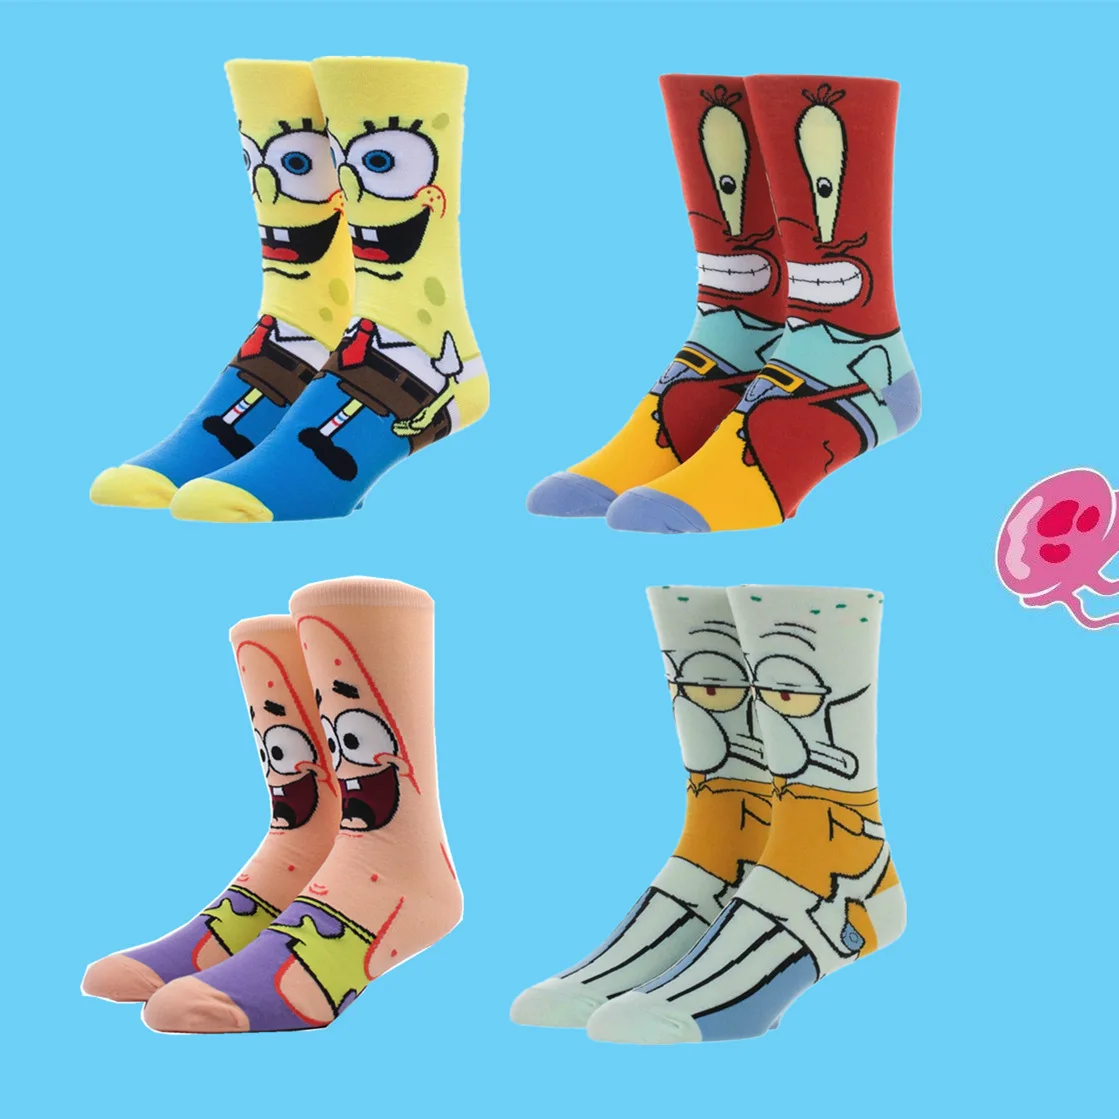 SpongeBob SquarePants Patrick Star Stocking